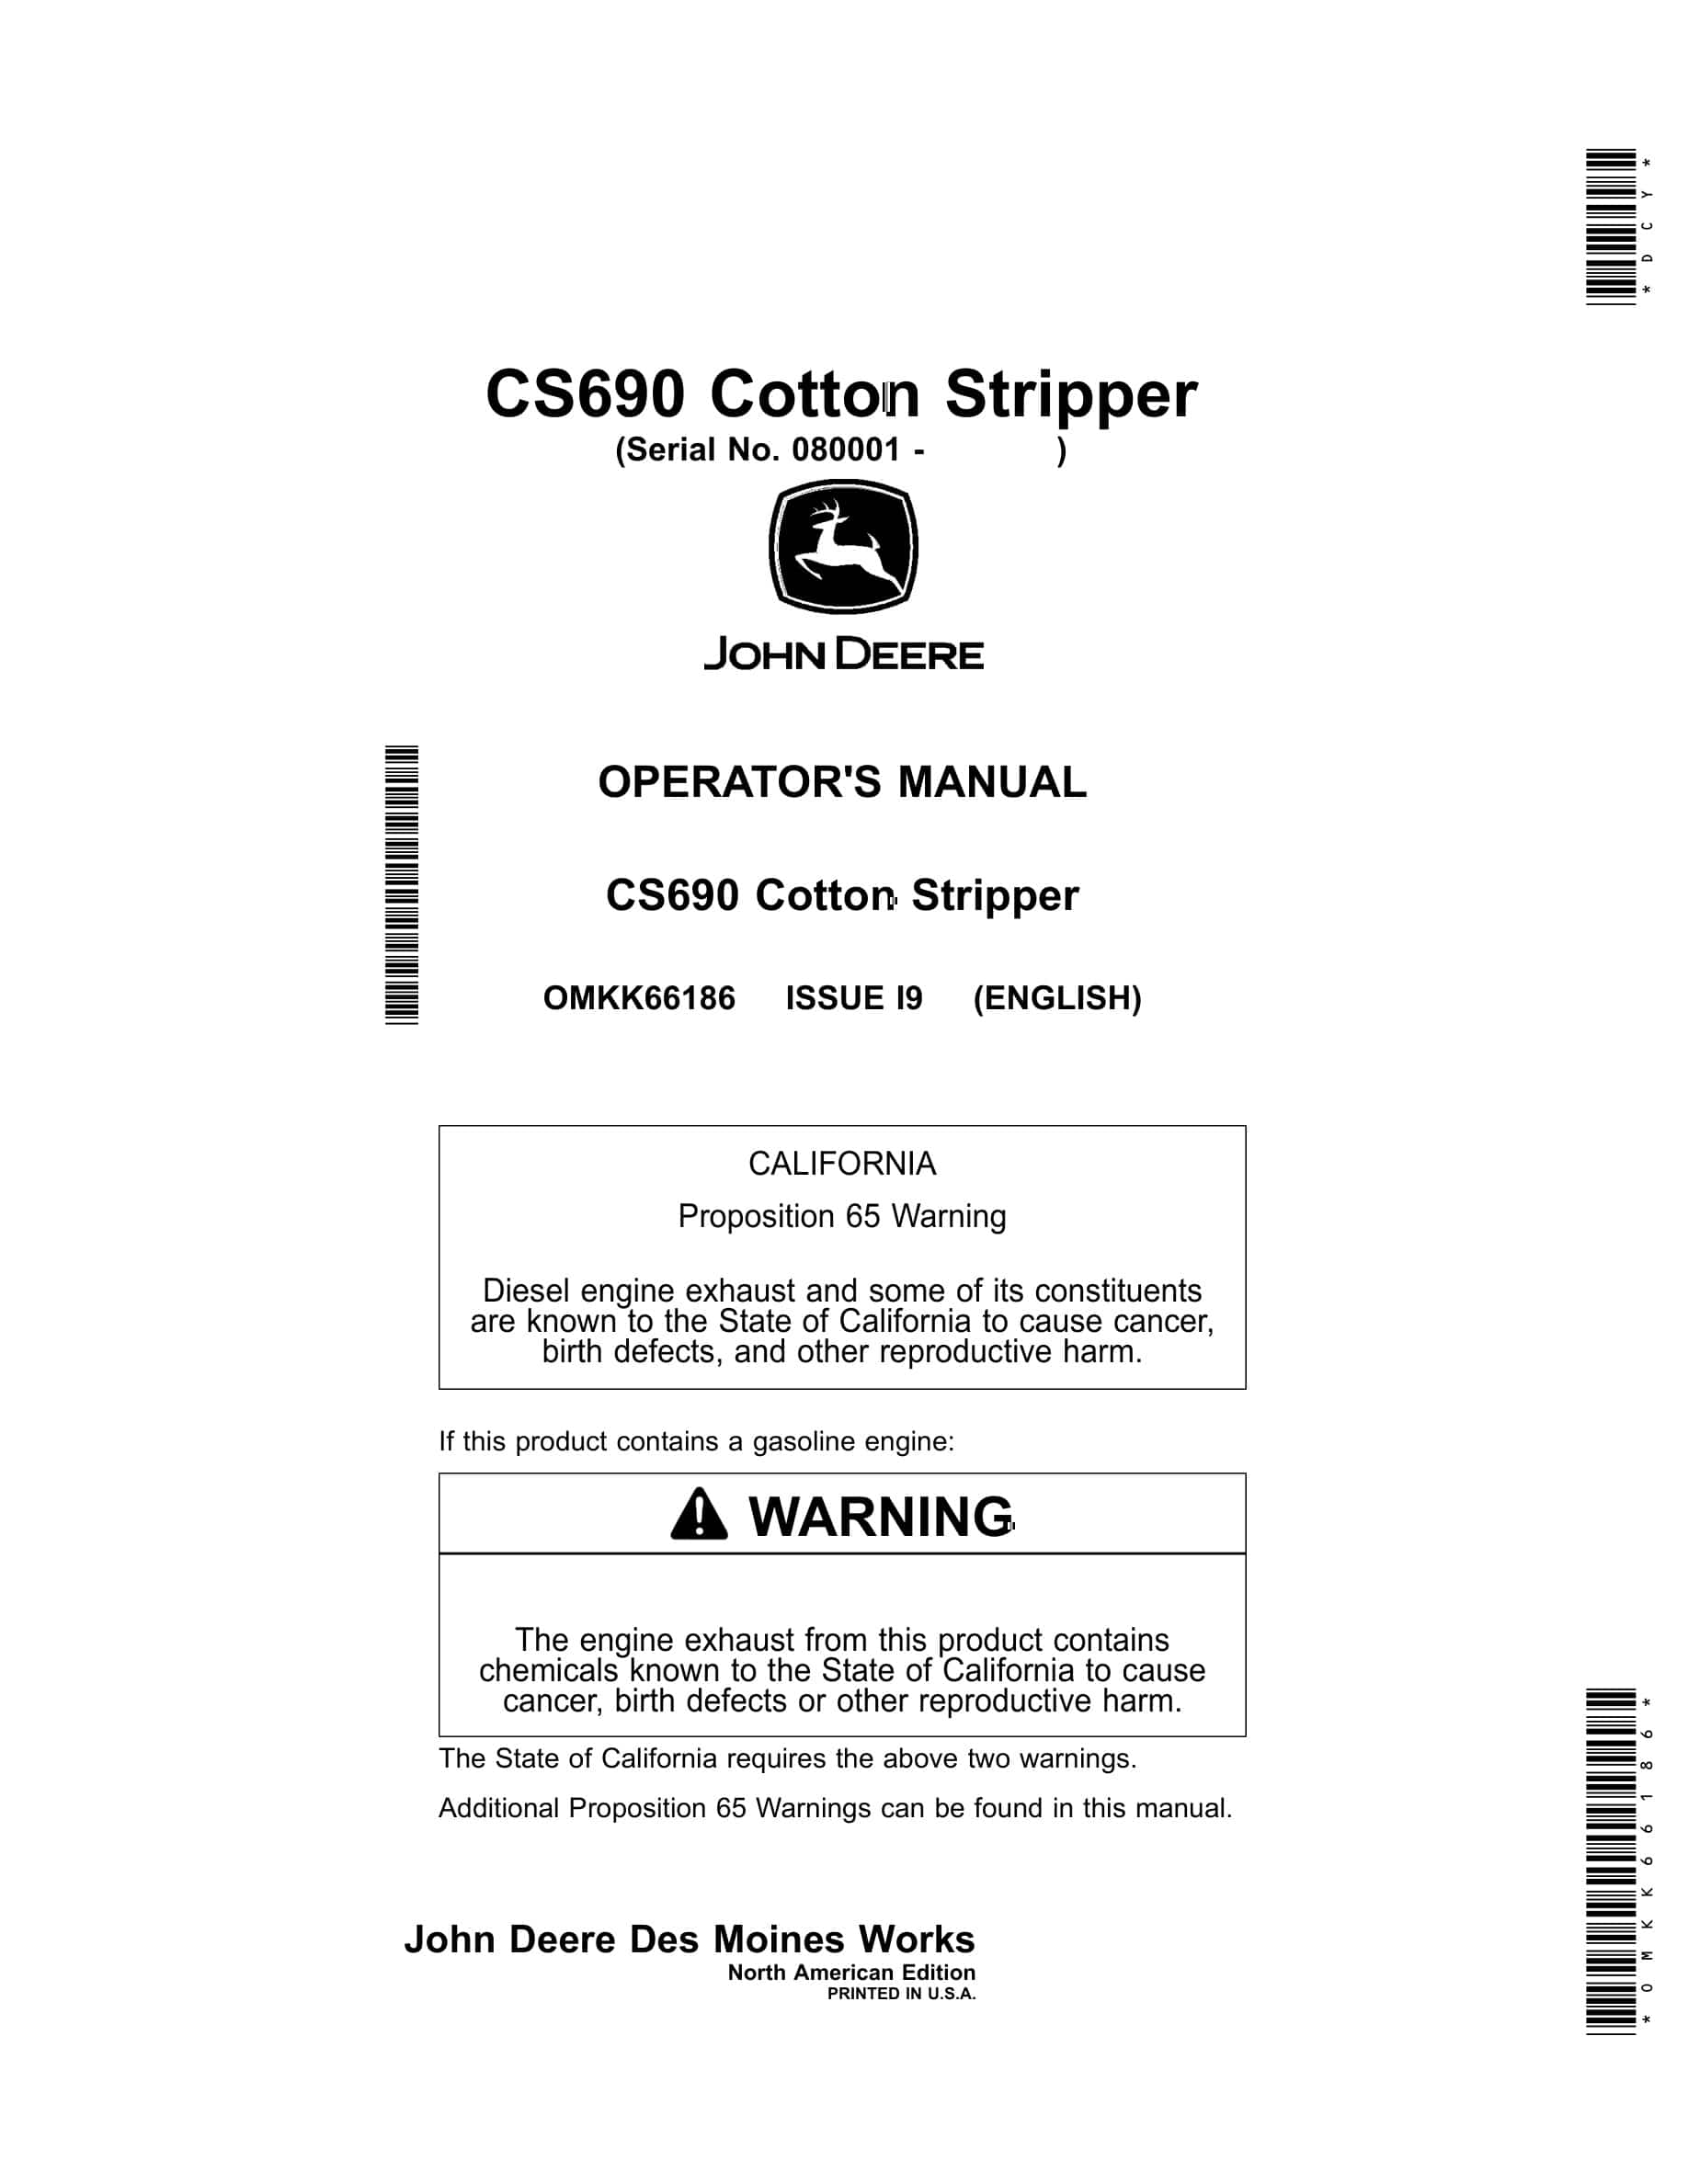 John Deere CS690 Cotton Stripper Operator Manual OMKK66186-1